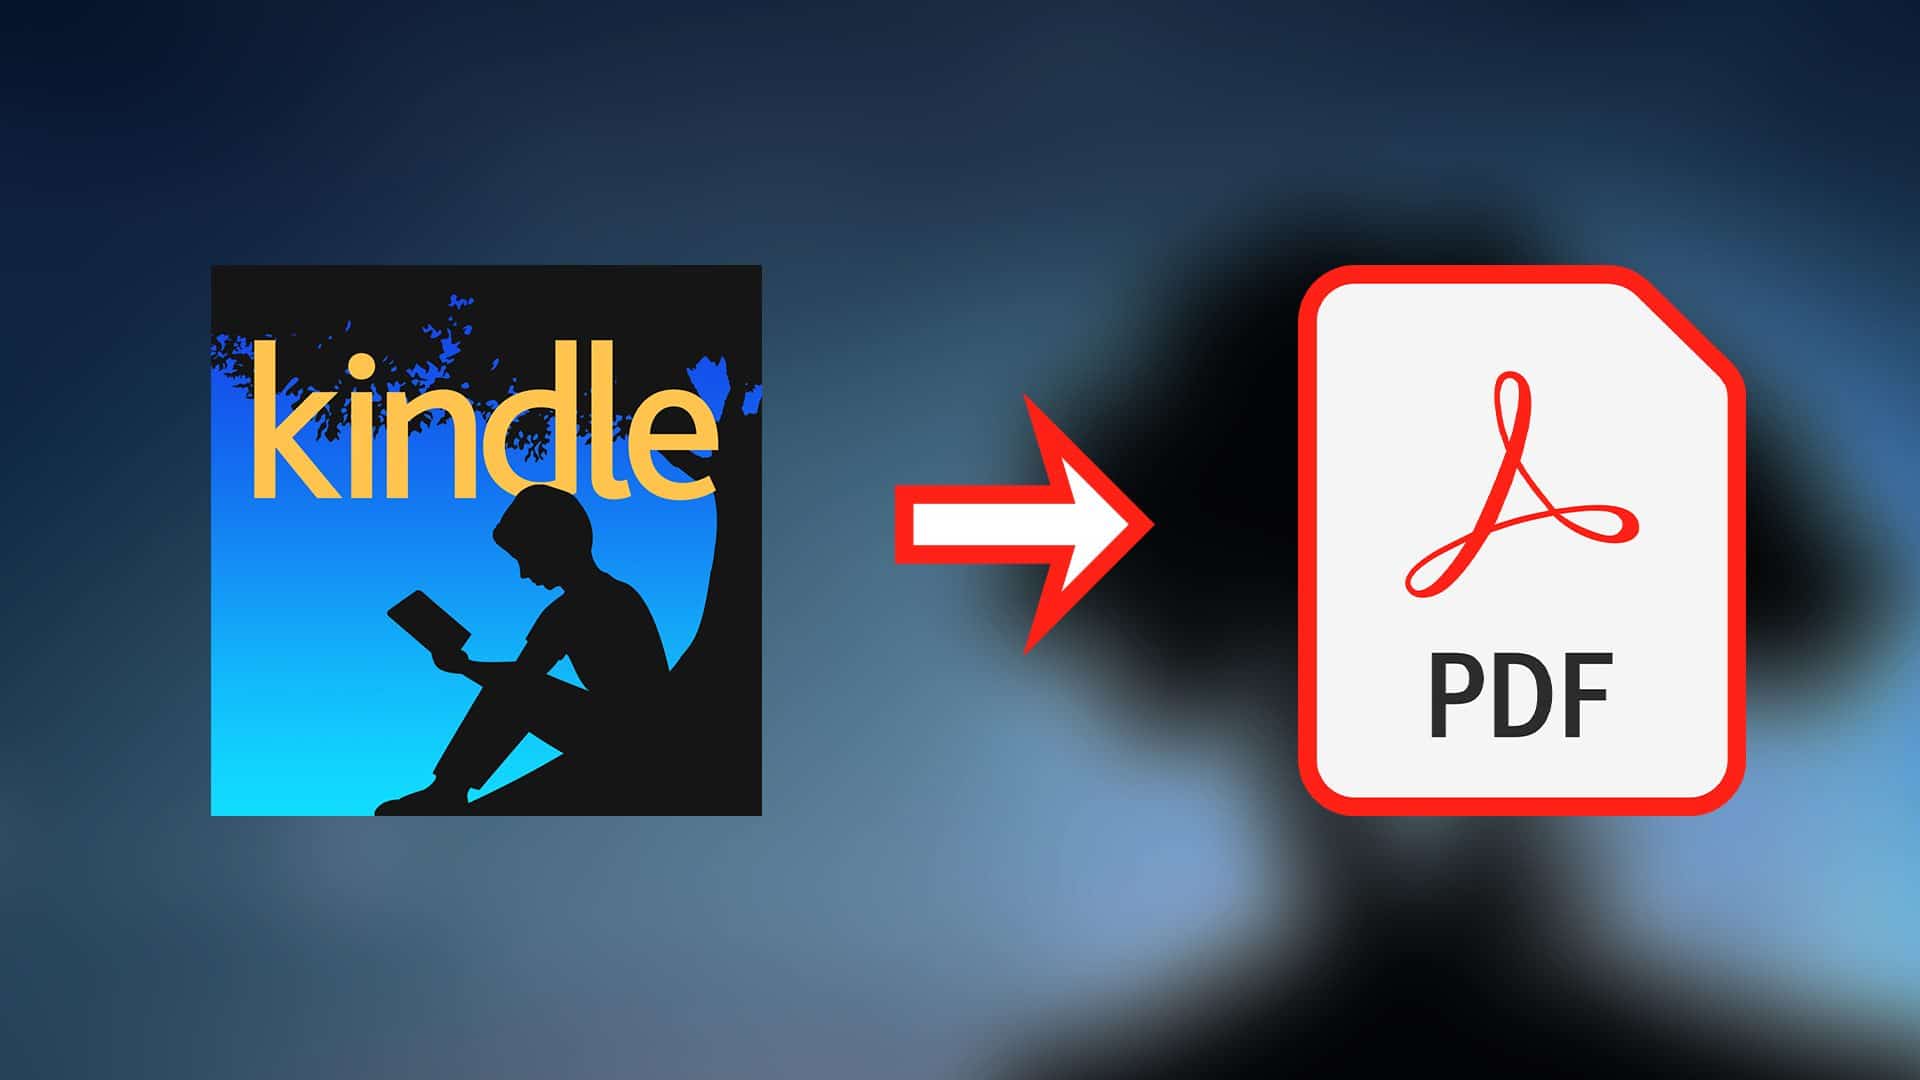 kindle2PDF - Amazonで購入したKindleをPDF化する方法